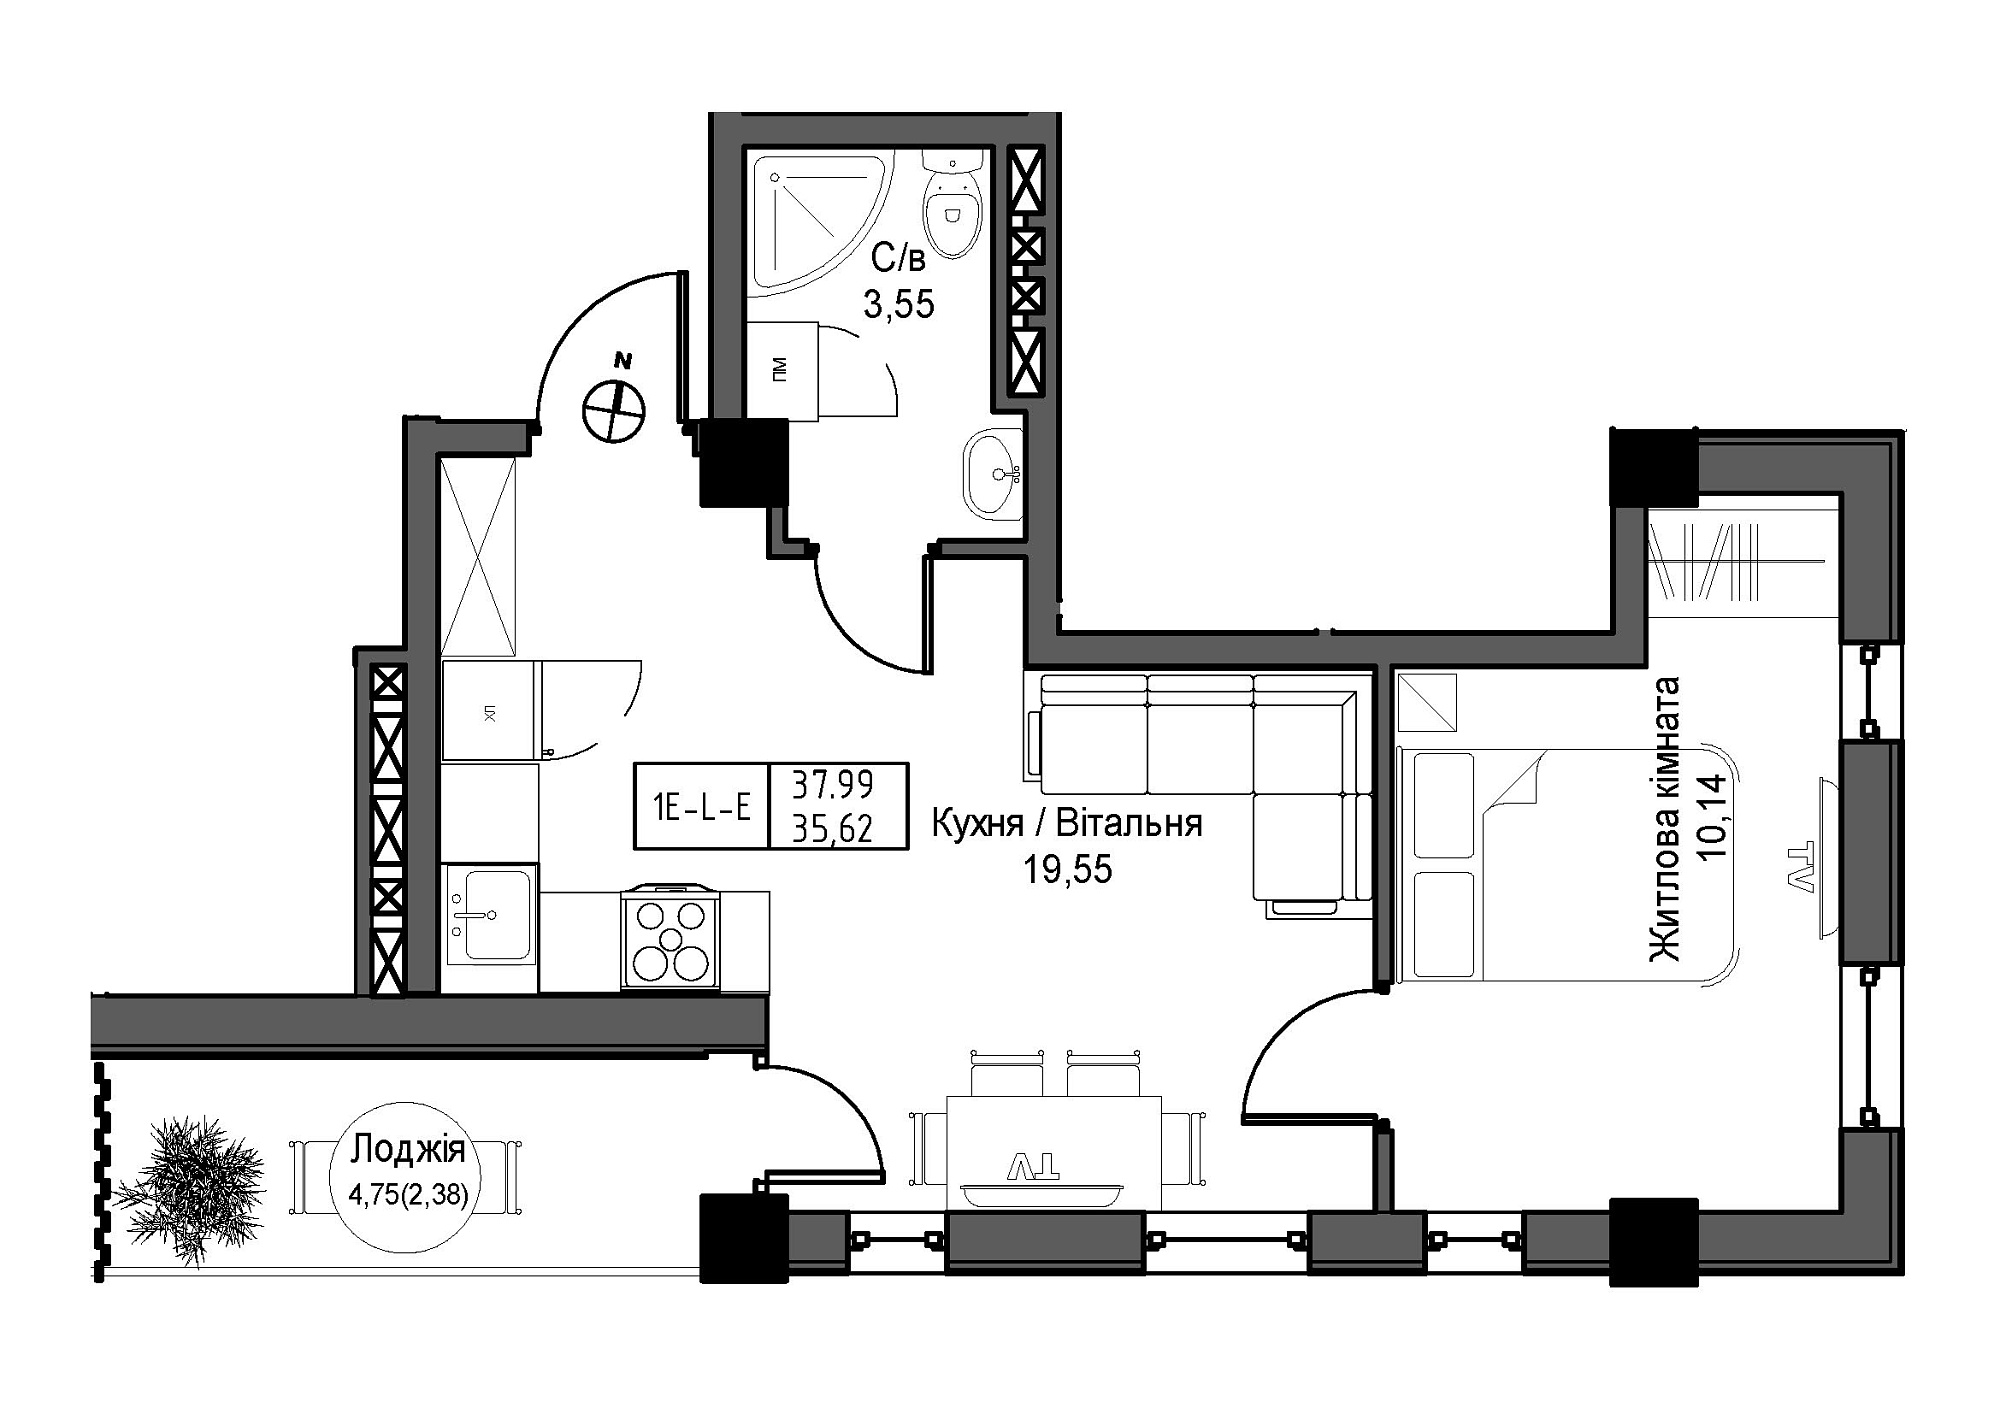 Планування 1-к квартира площею 35.62м2, UM-007-05/0009.